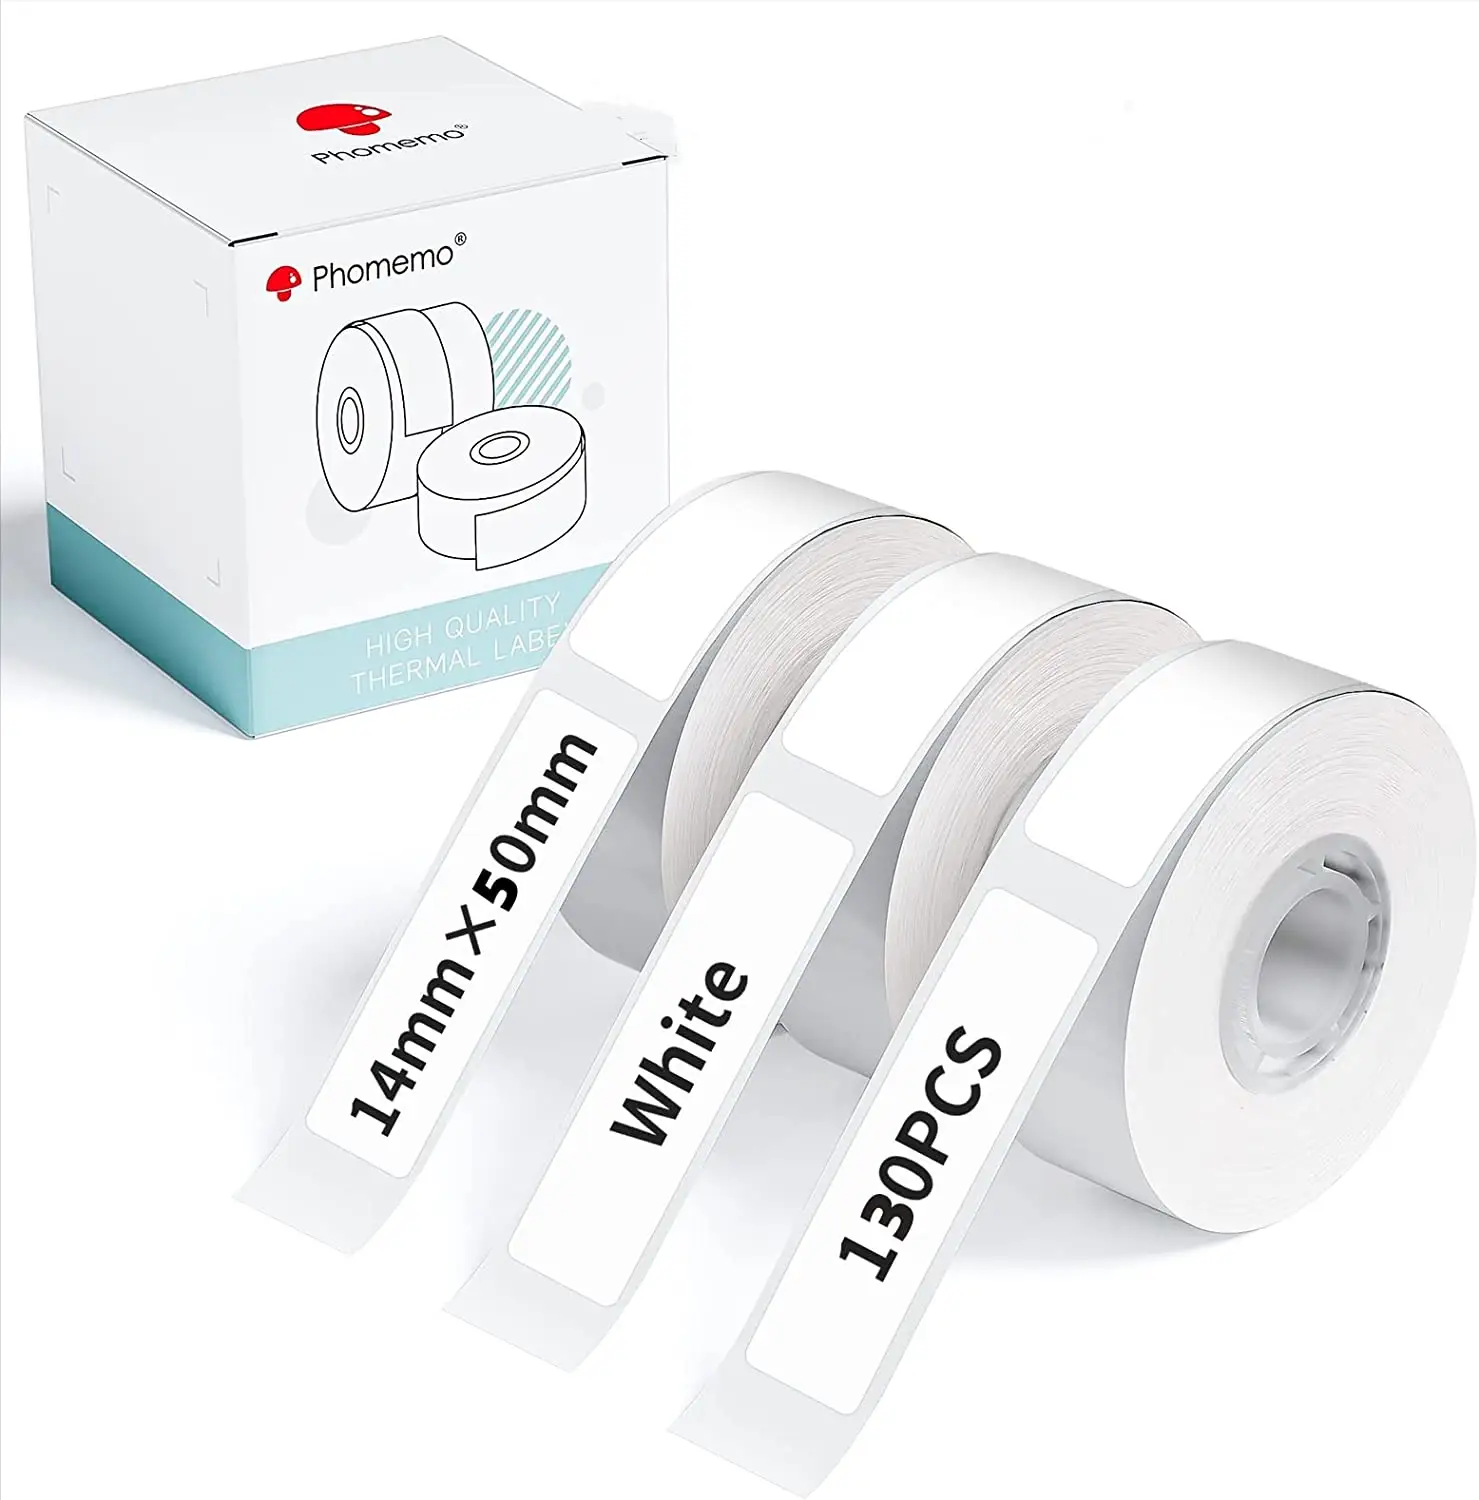 Phomemoq30-serie Drie Hittebestendig Zelfklevend Etiketprinter Papier